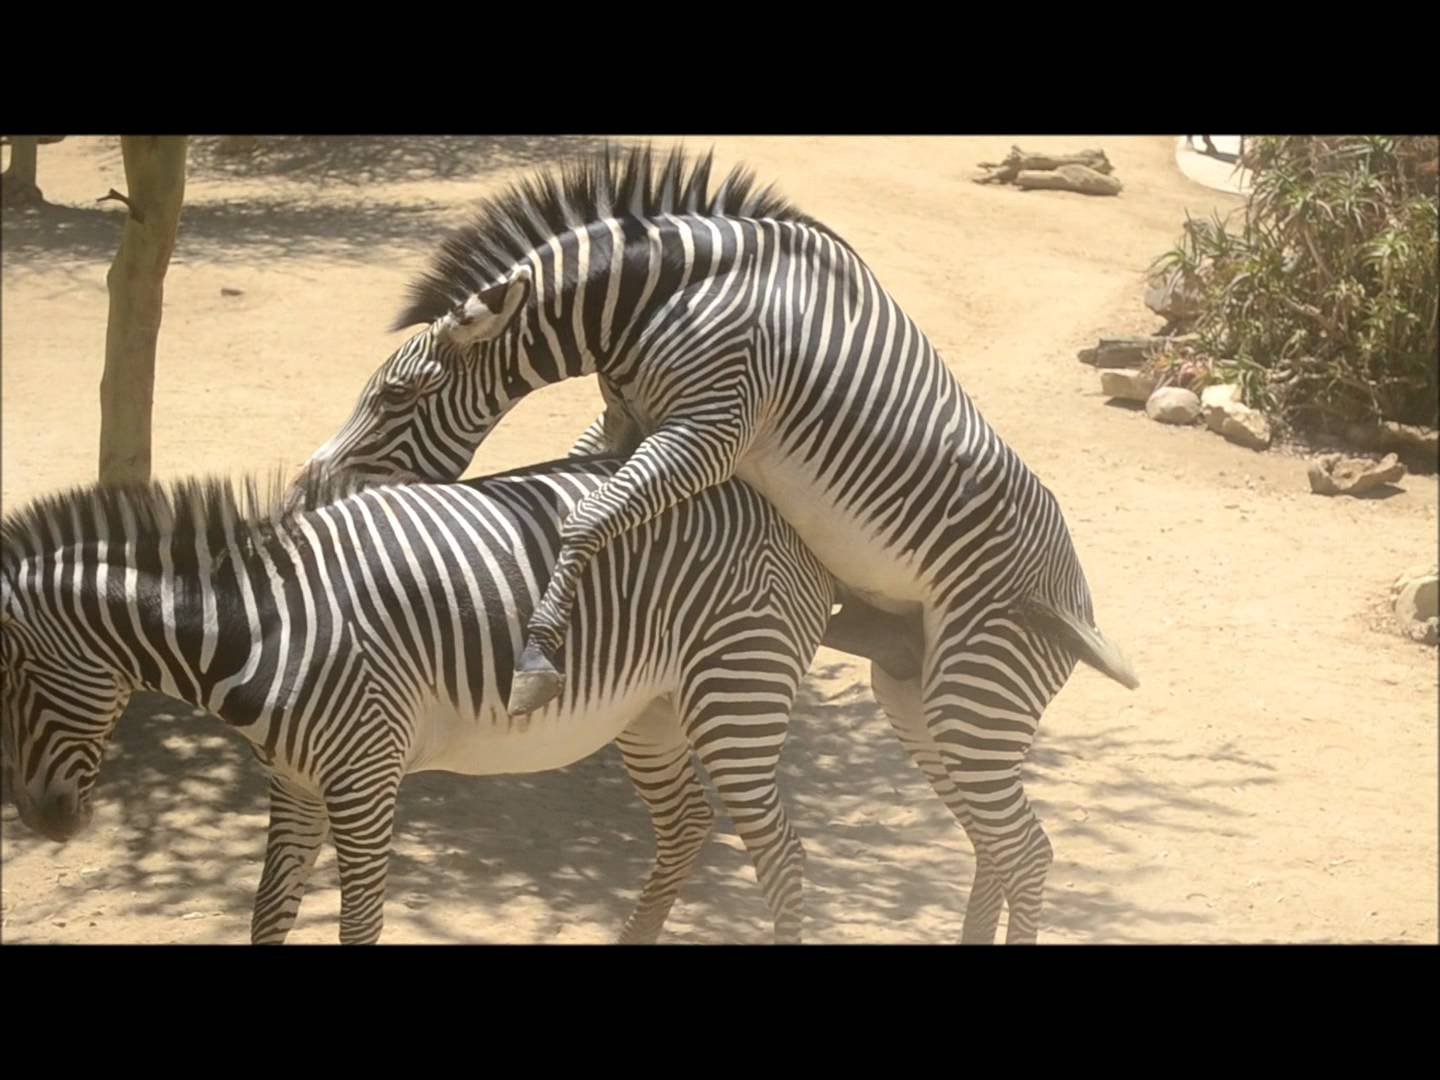 1440px x 1080px - zebra Archives - Animal Video WorldAnimal Video World